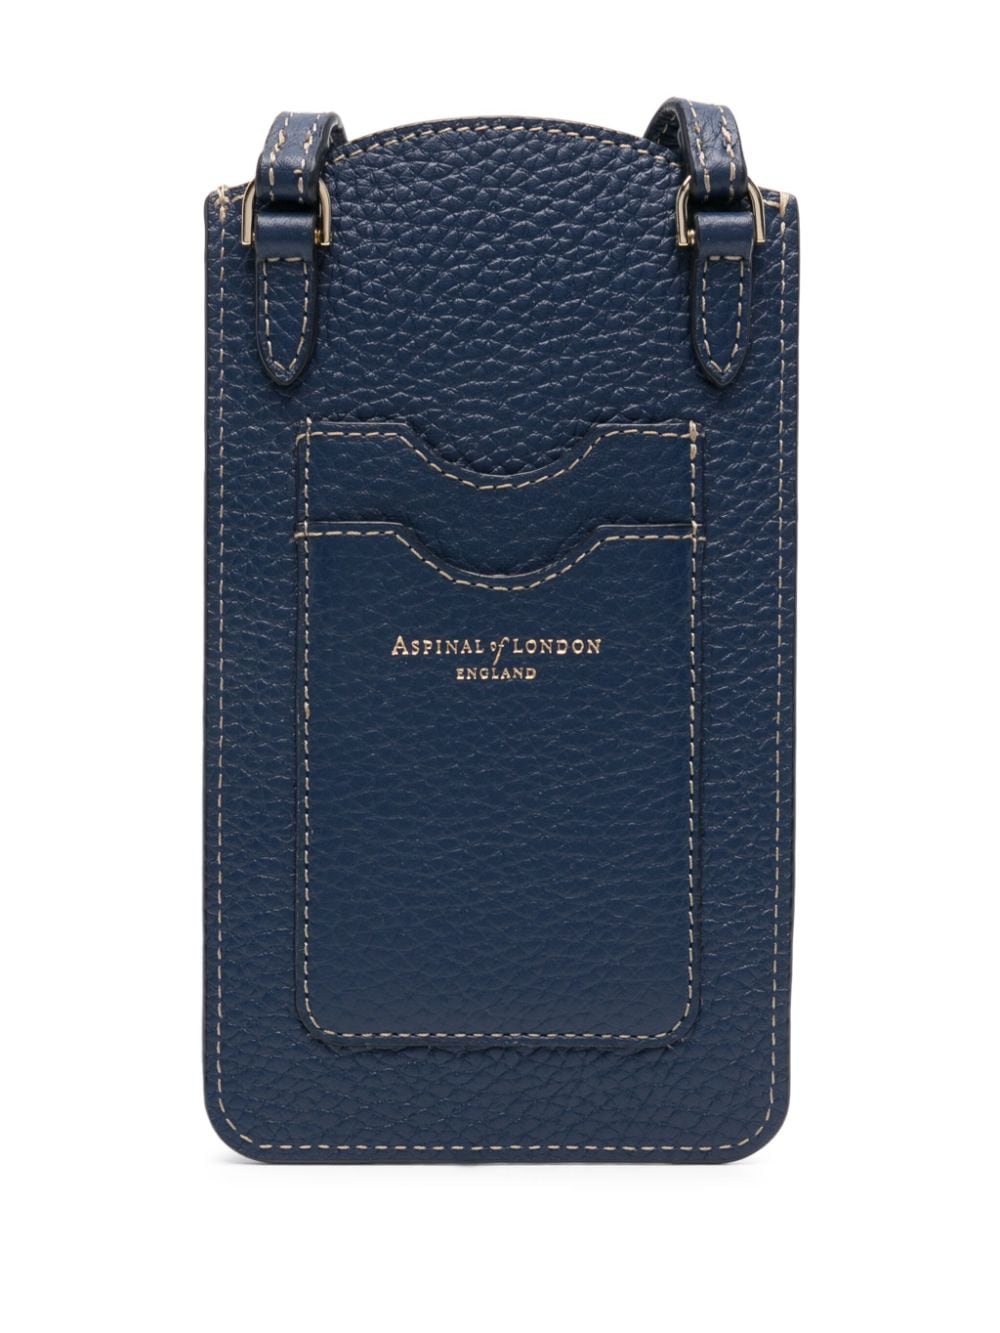 Aspinal Of London London leather mini bag - Blauw